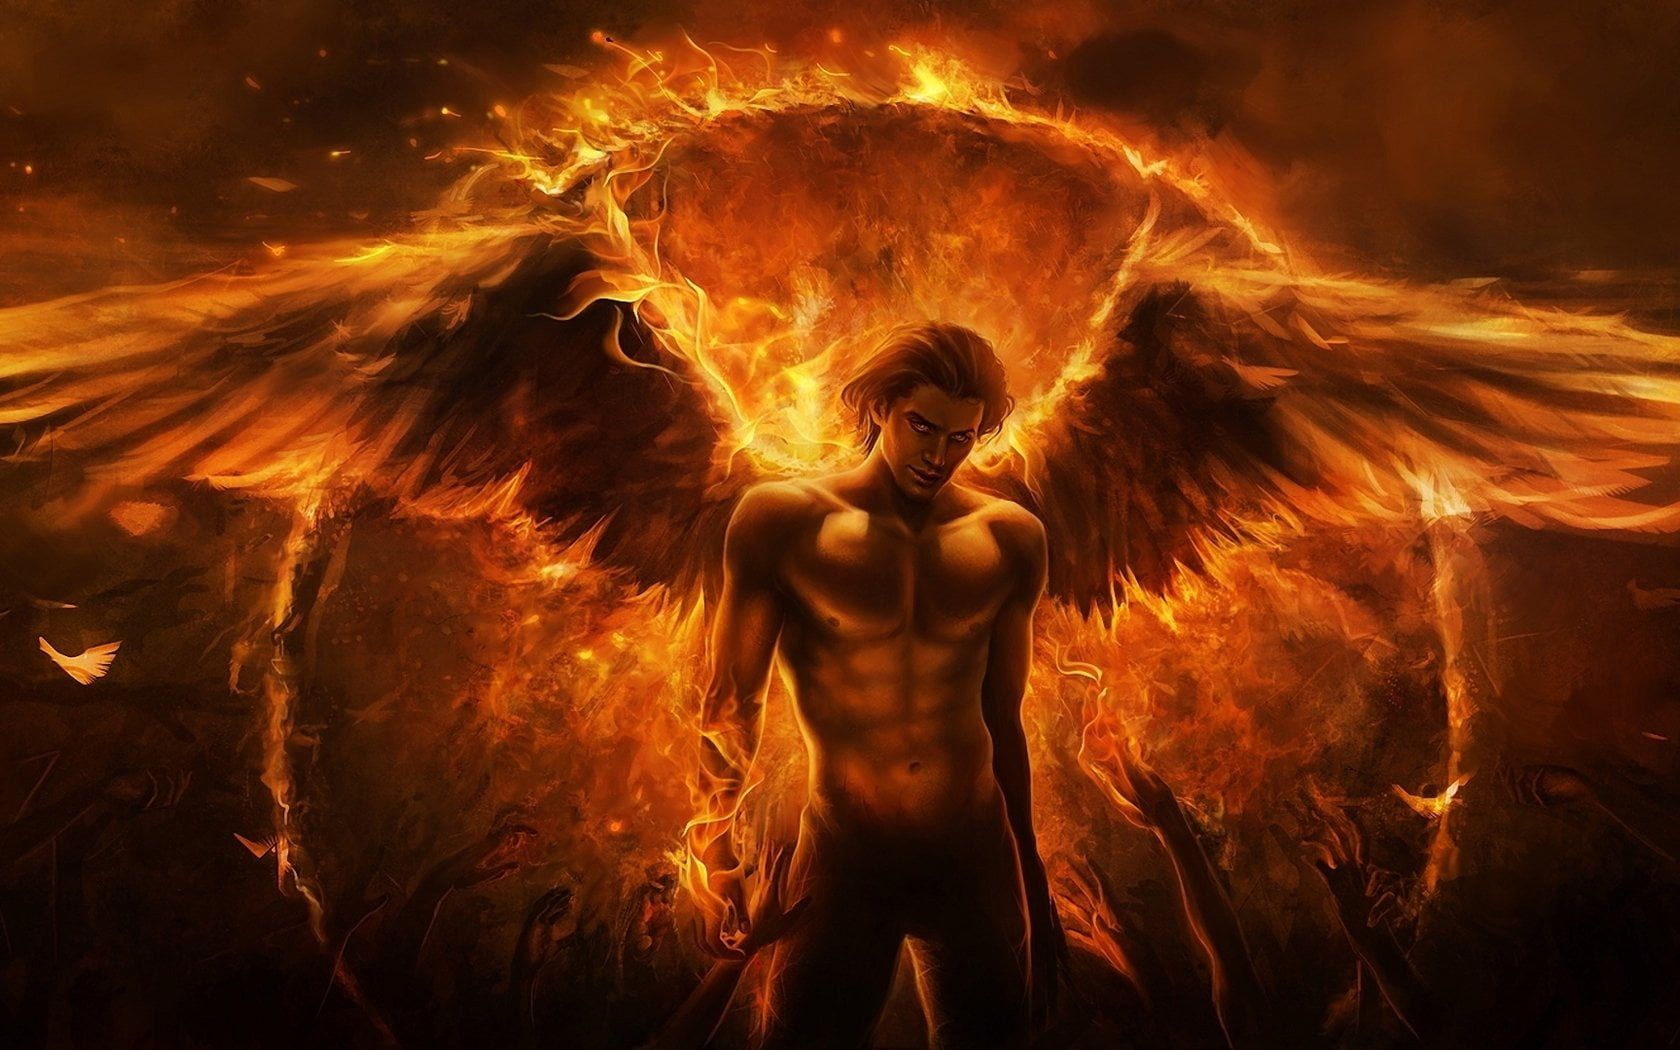 Lucifer illustration, Dark, Angel, Fire, Flame, Hell, Warrior wallpaper • Wallpaper For You HD Wallpaper For Desktop & Mobile